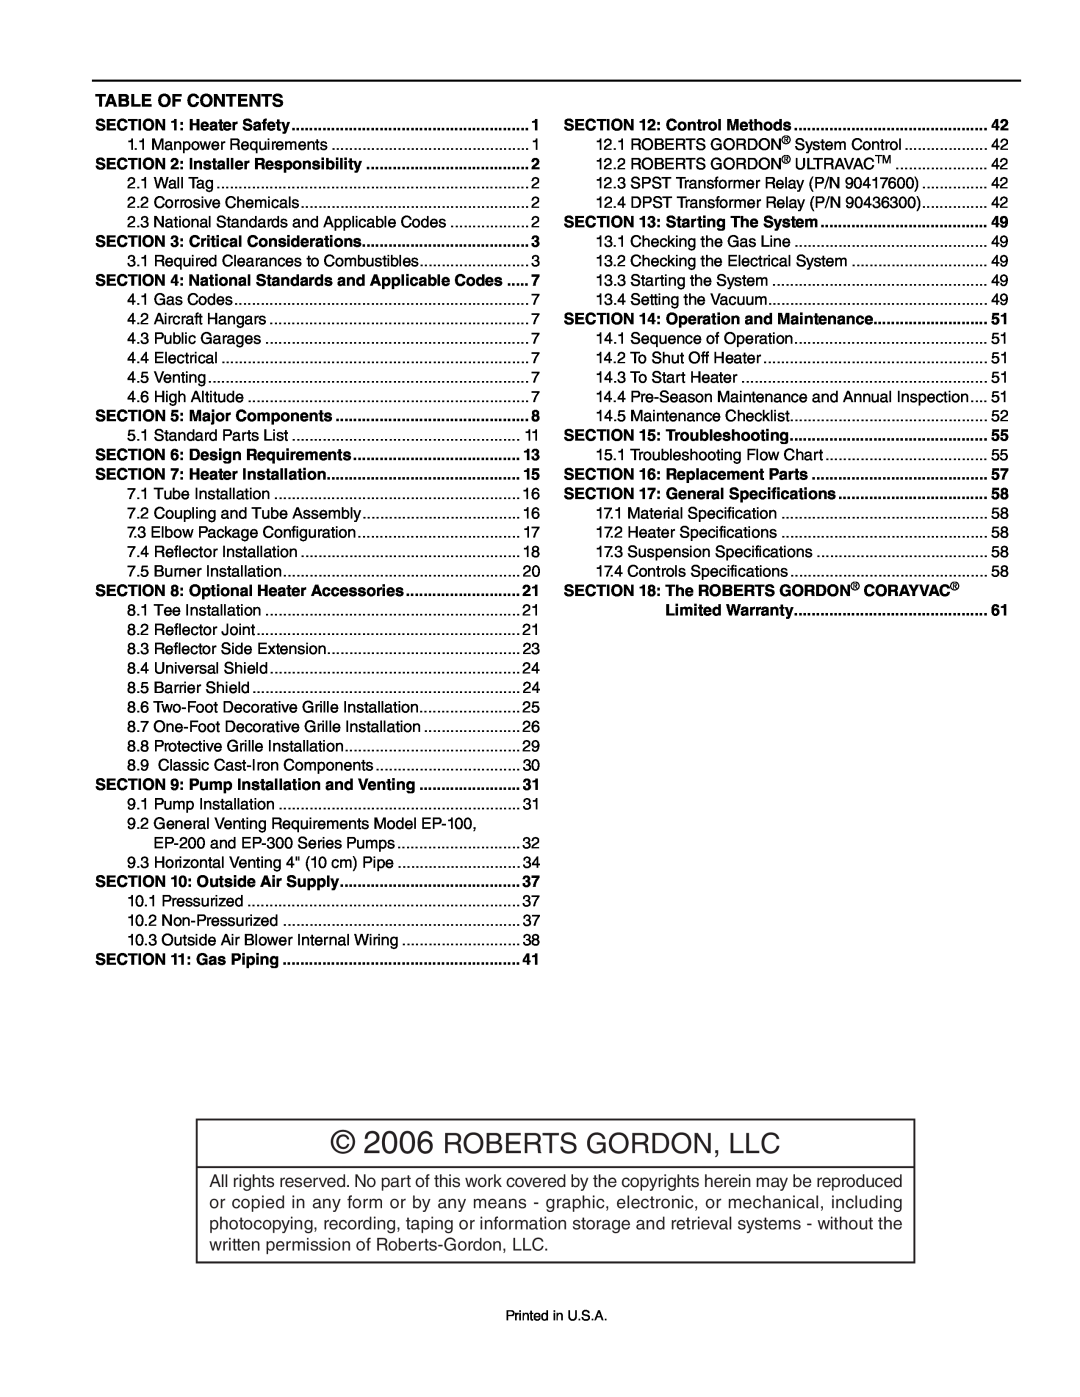 Roberts Gorden CRV-B-6 Roberts Gordon, Llc, Table Of Contents, Heater Safety, Control Methods, Installer Responsibility 